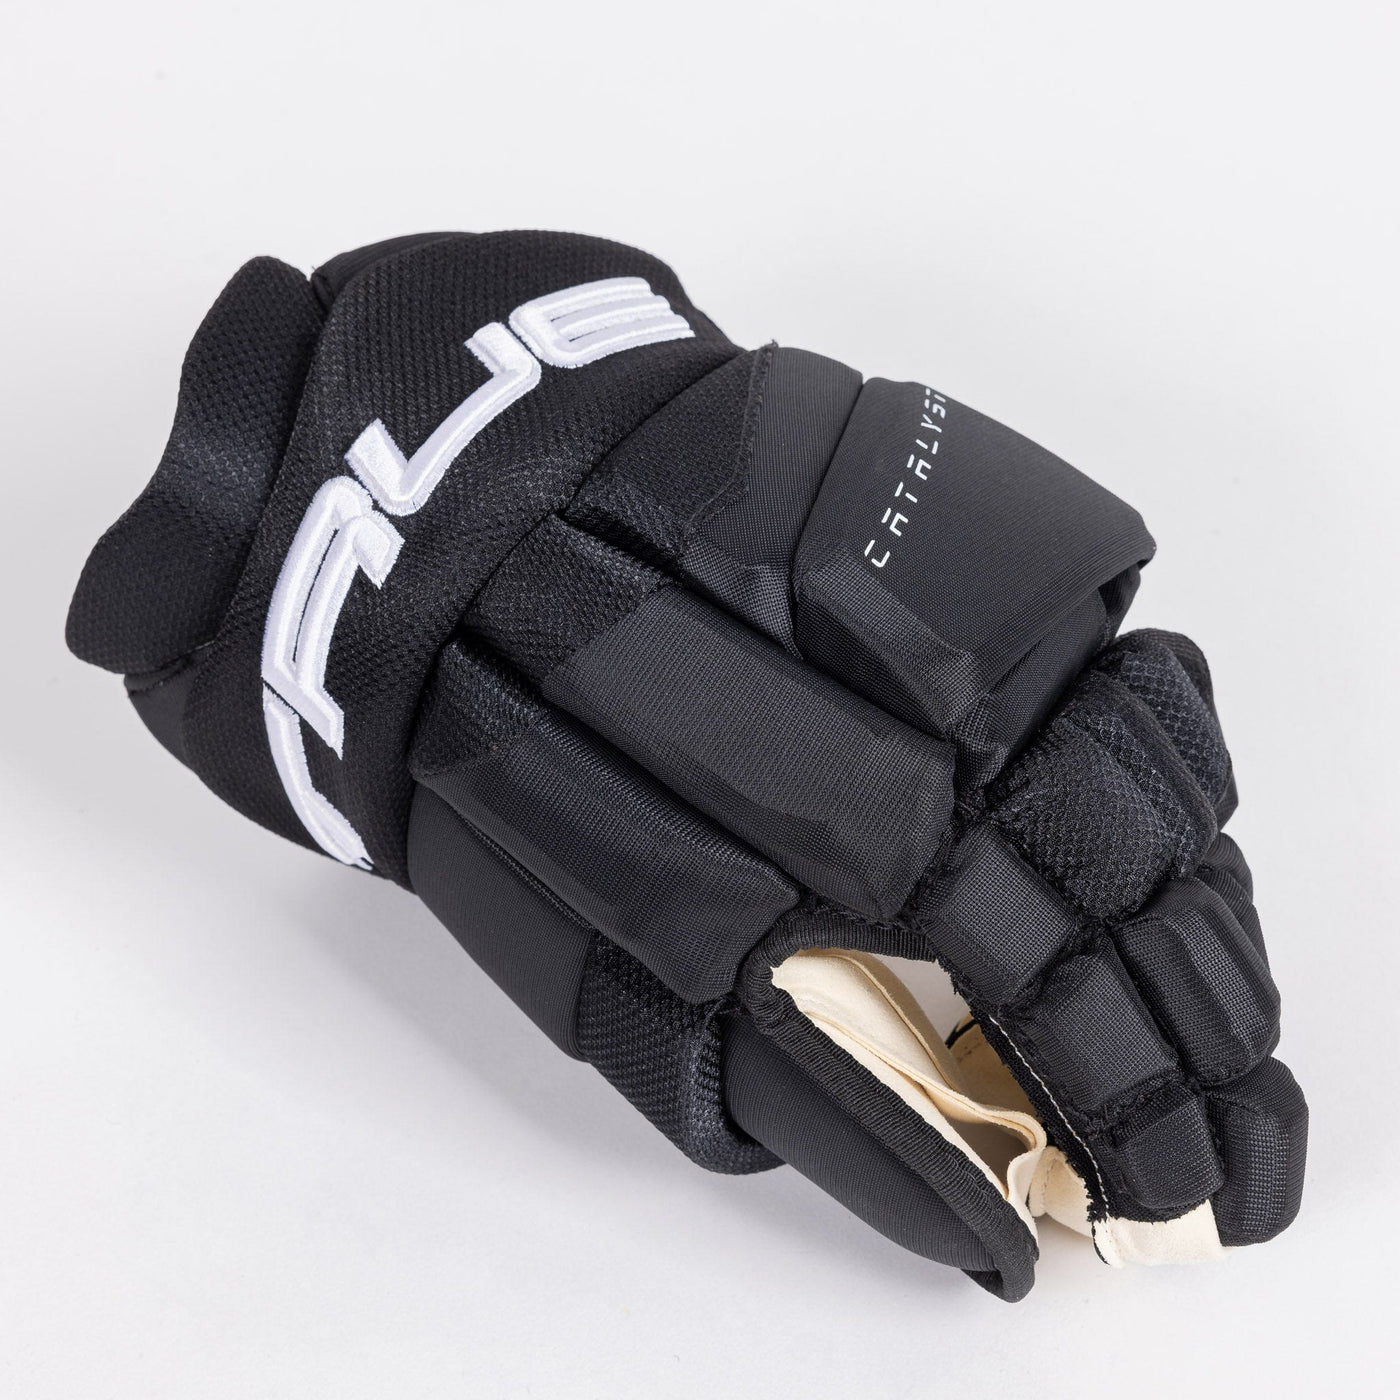 TRUE Catalyst Pro Stock Senior Hockey Glove - San Jose - The Hockey Shop Source For Sports